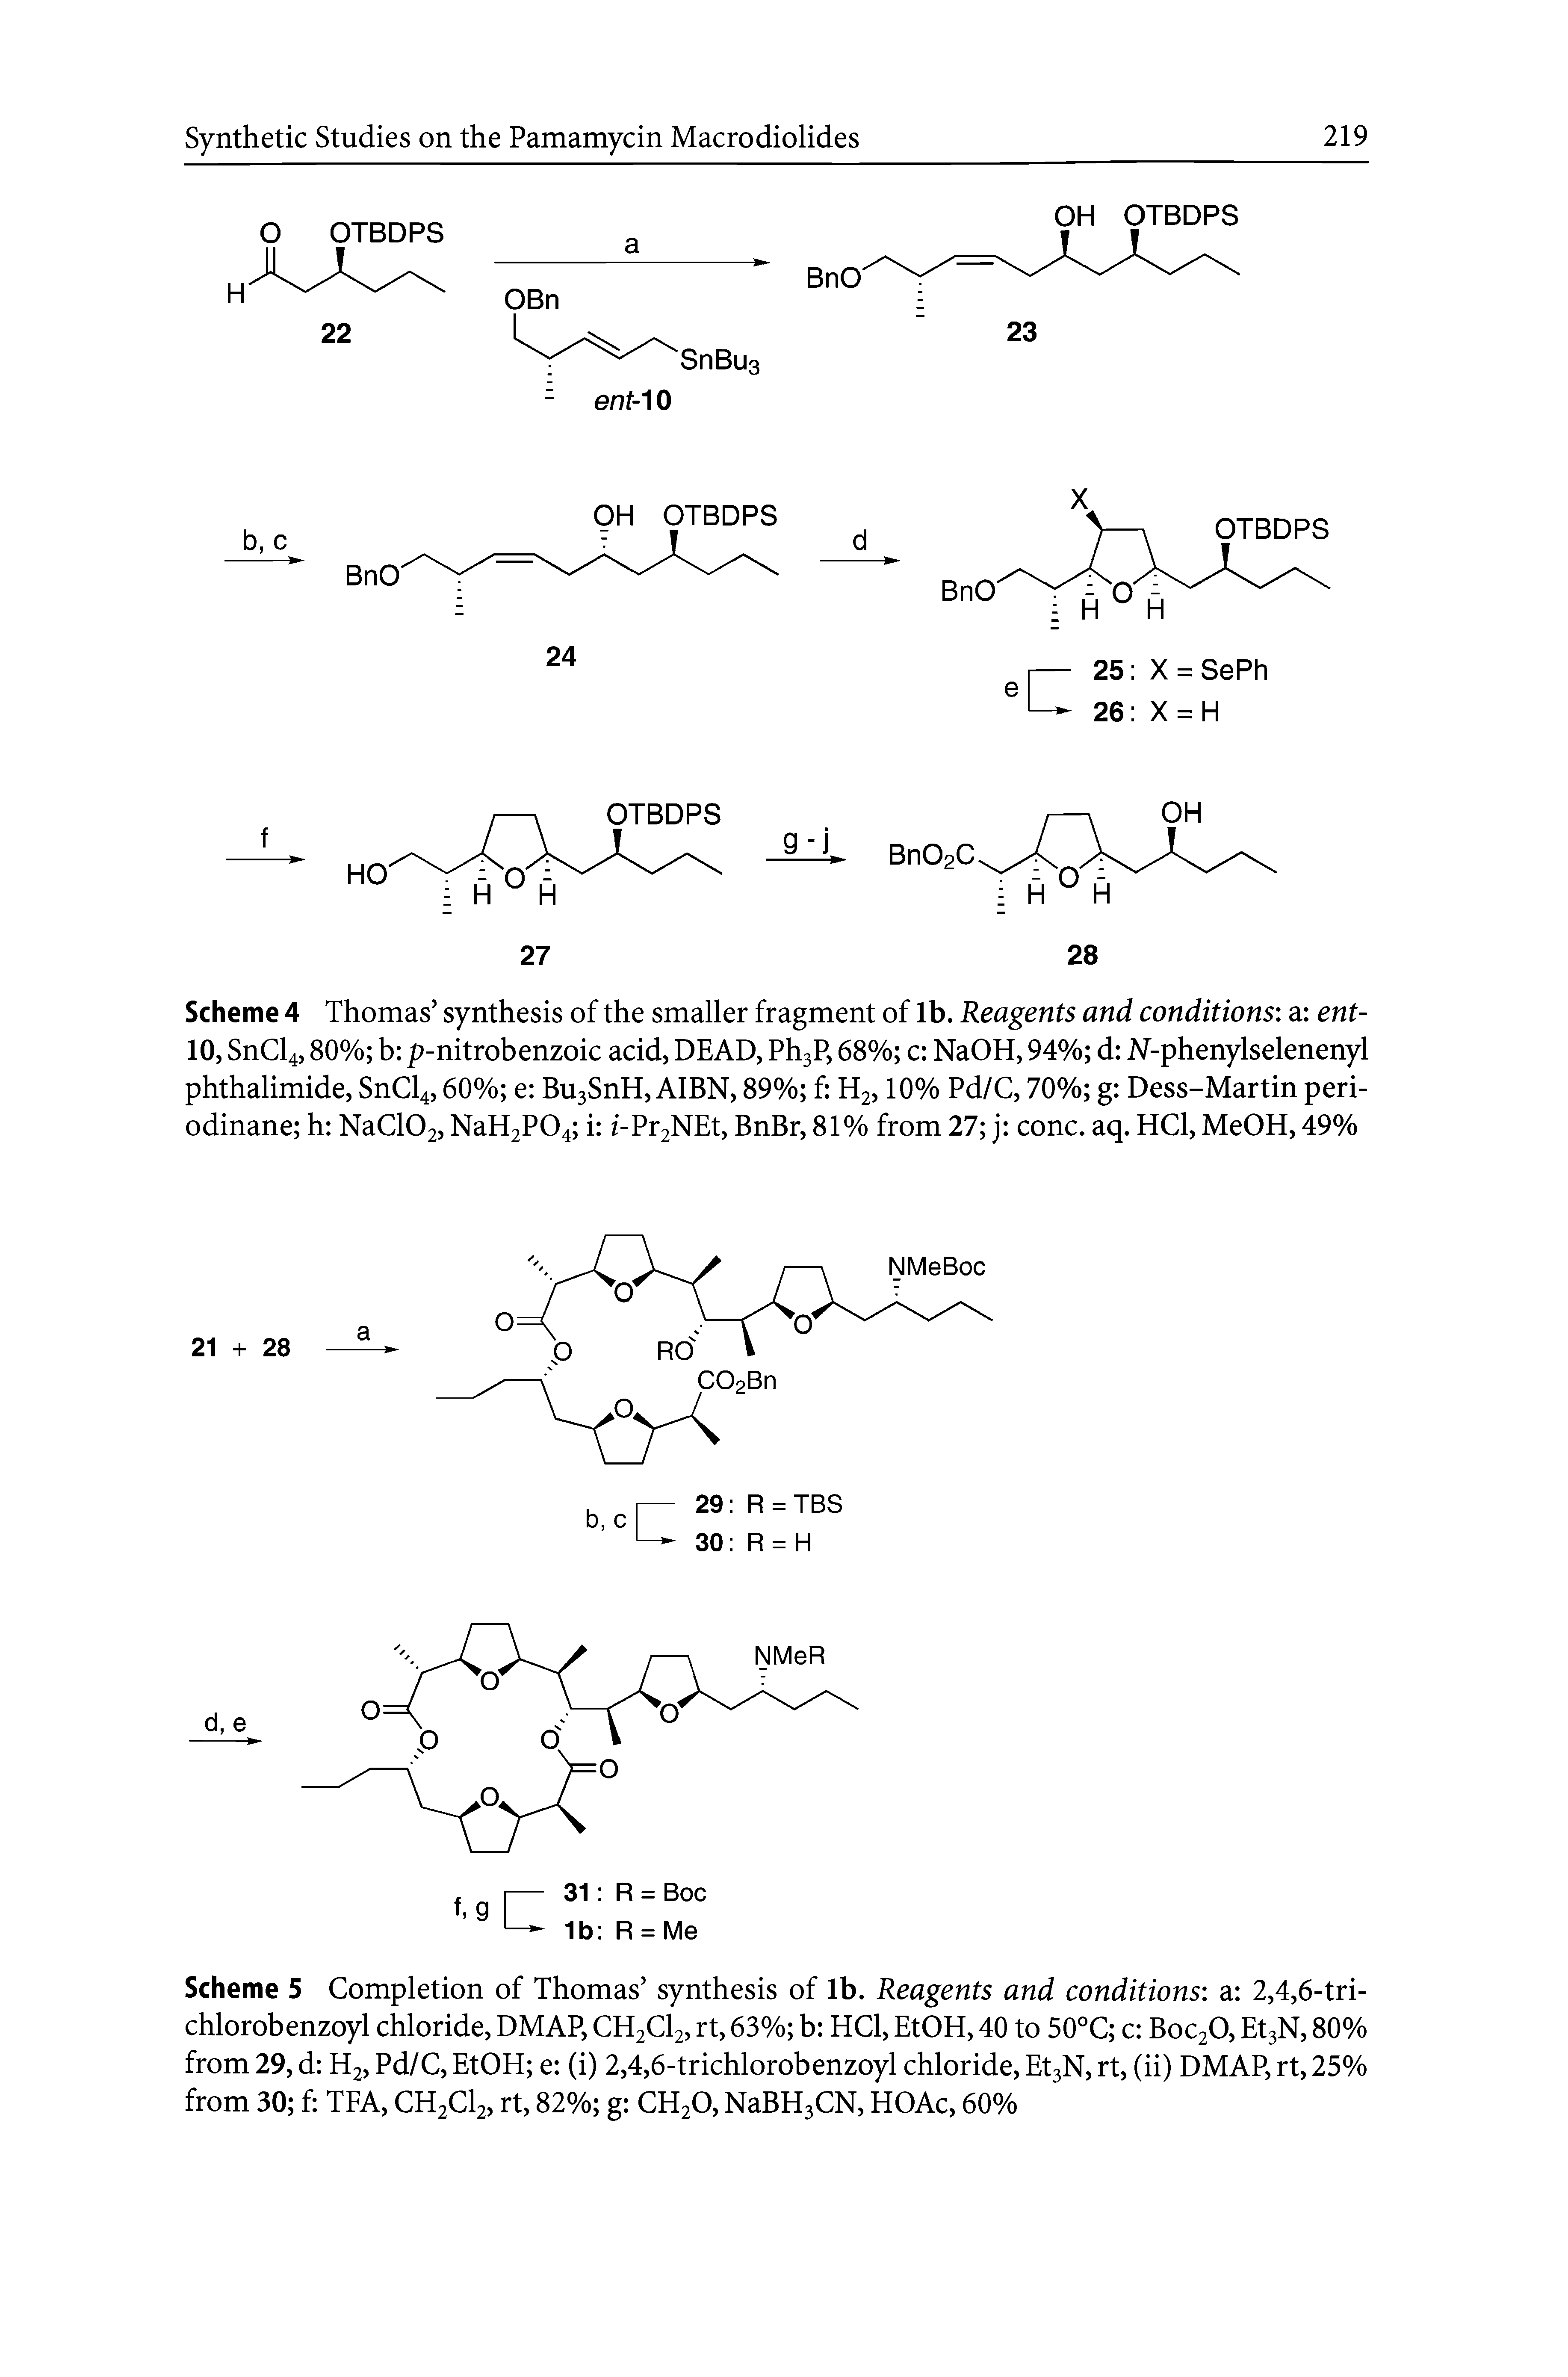 Scheme 4 Thomas synthesis of the smaller fragment of lb. Reagents and conditions a ent-10, SnCl4,80% b p-nitrobenzoic acid, DEAD, Ph3P, 68% c NaOH, 94% d N-phenylselenenyl phthalimide, SnCl4,60% e Bu3SnH, AIBN, 89% f H2,10% Pd/C, 70% g Dess-Martin peri-odinane h NaCl02, NaH2P04 i z-Pr2NEt, BnBr, 81% from 27 j cone. aq. HCl, MeOH, 49%...